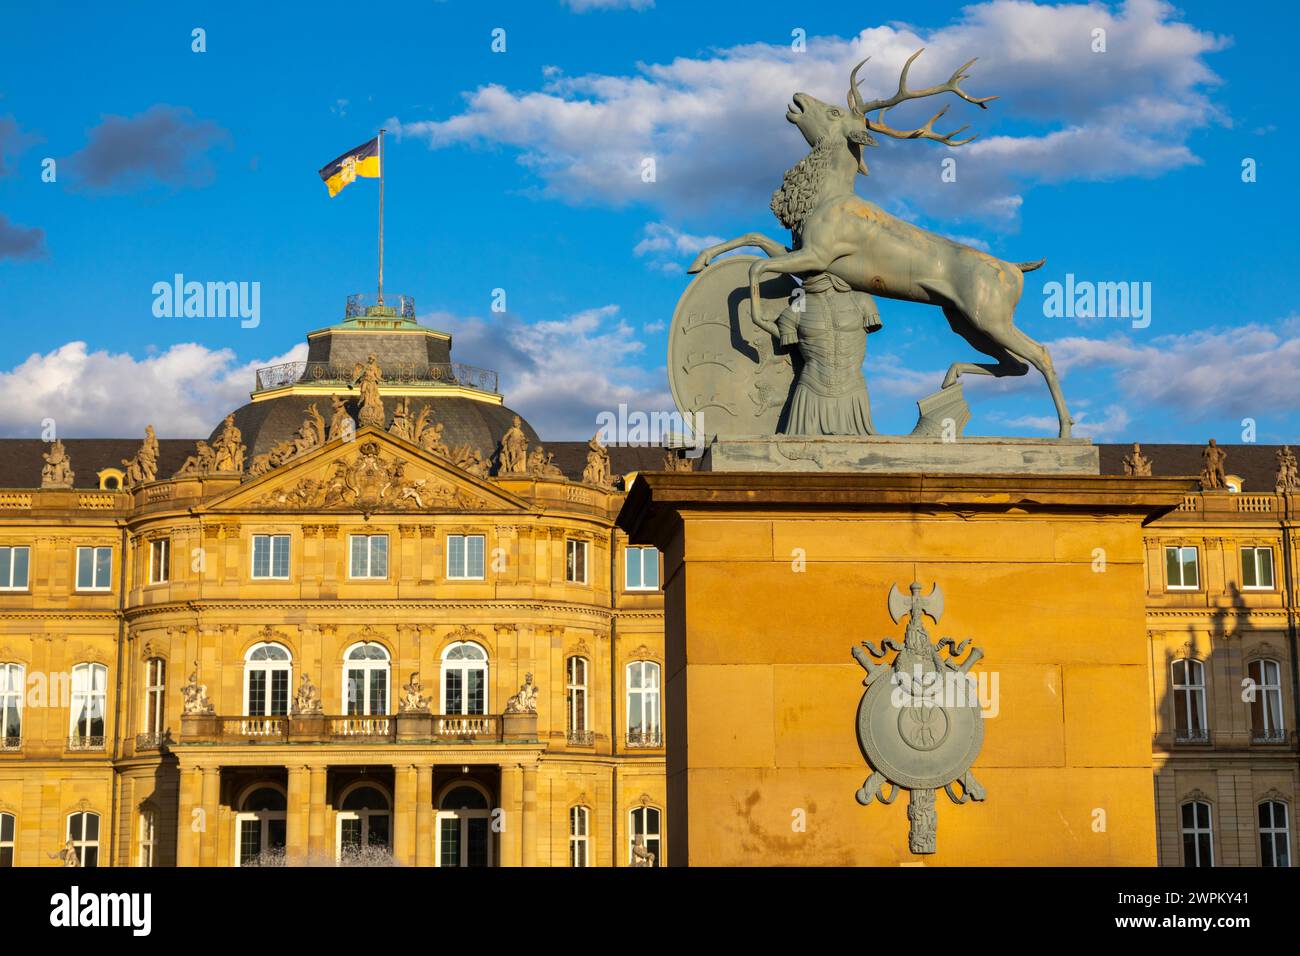 Statue de cerf à l'entrée, Neues Schloss (Nouveau Palais), Neues Schloss, Stuttgart, Bade-Wurtemberg State, Allemagne, Europe Banque D'Images